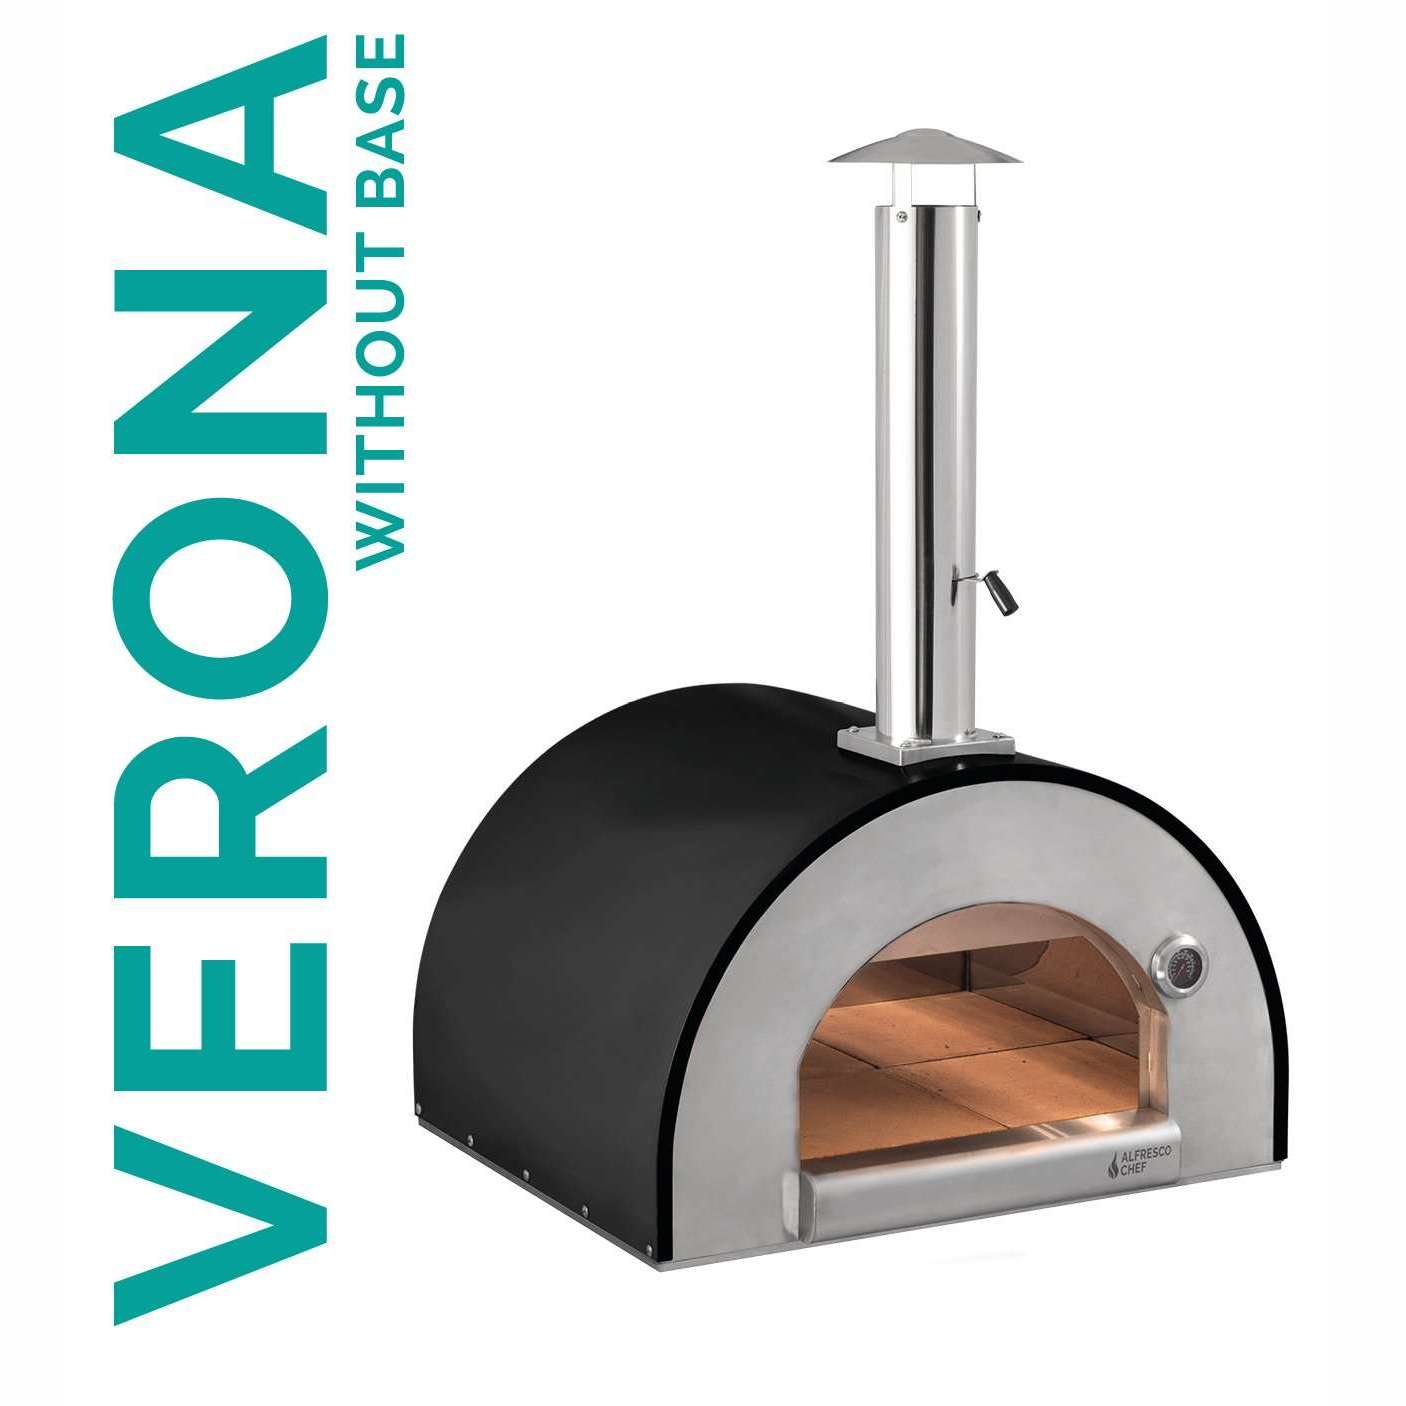 Exceptional Garden:Alfresco Chef Verona Wood Fired Outdoor Pizza Oven